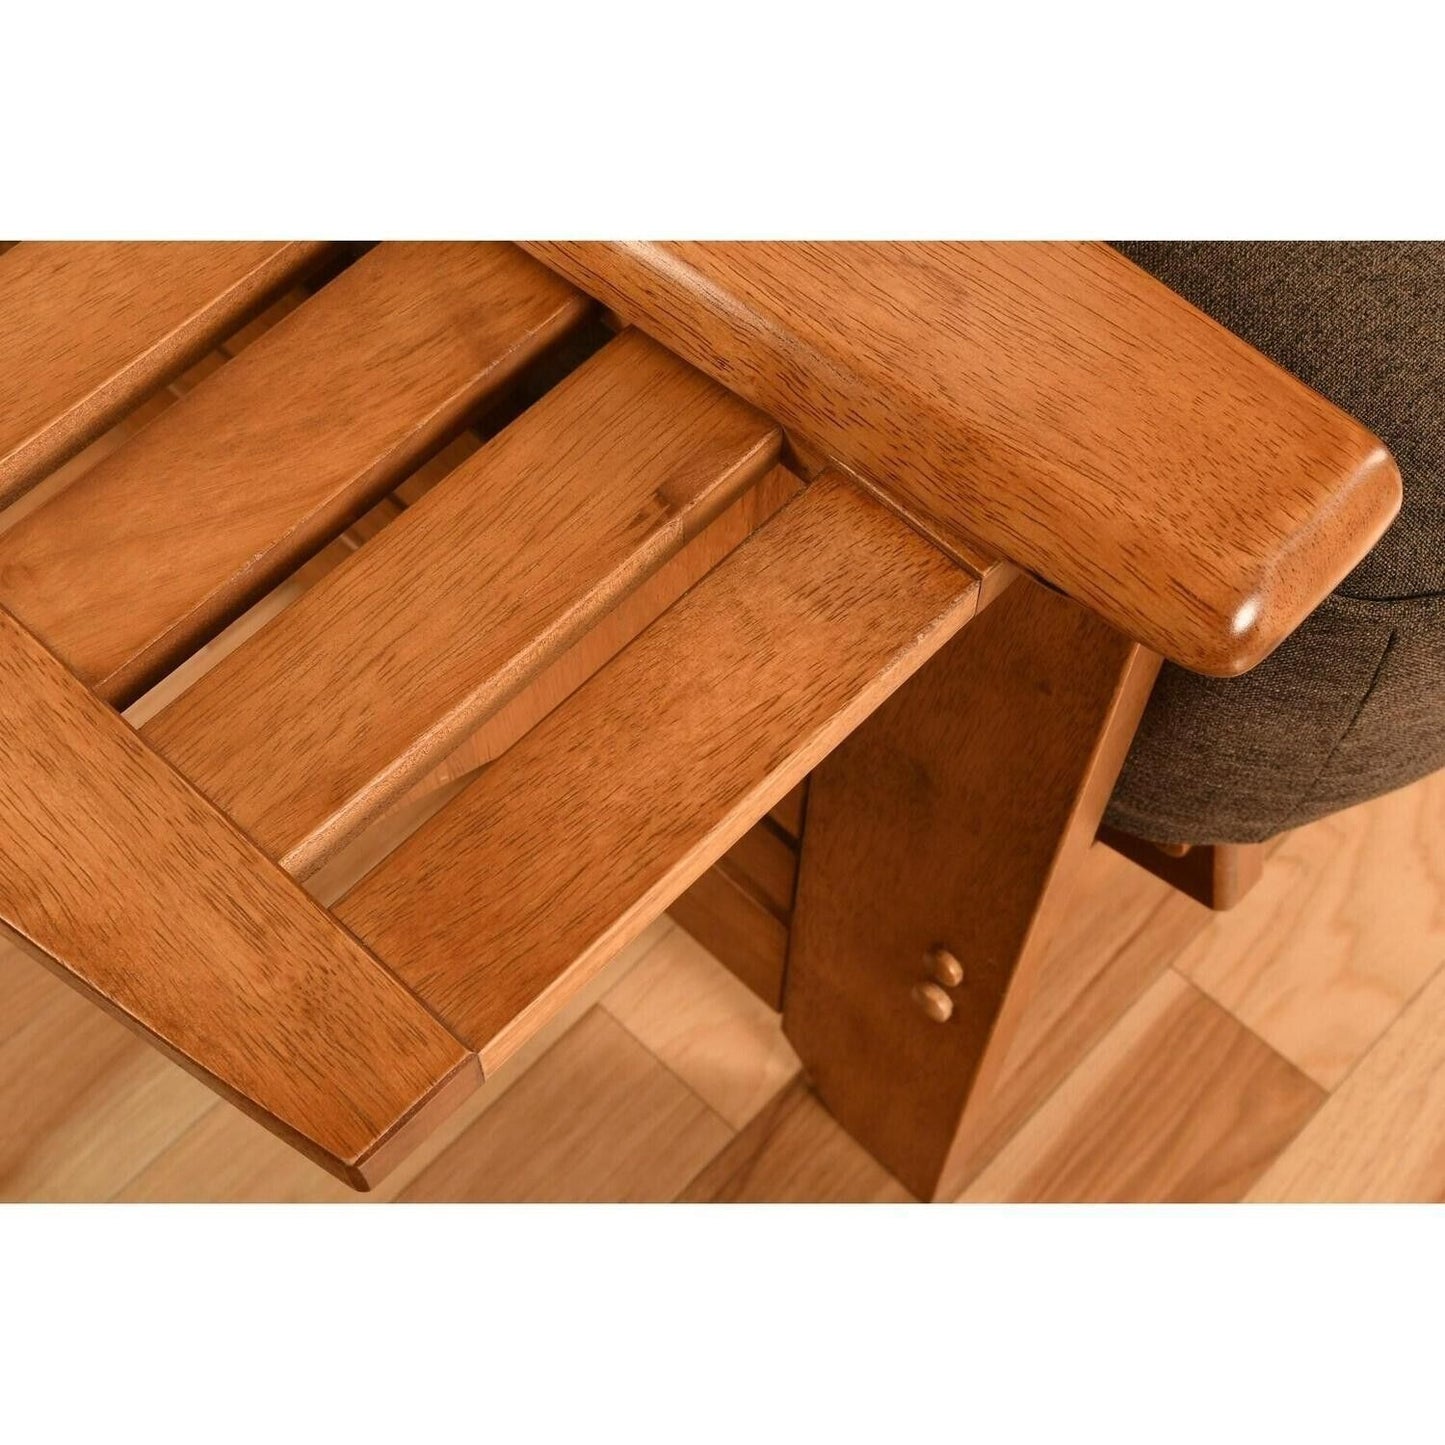 Futon Bed Set - Full Sz Solid Wood Futon w/Cotton Mattress & Storage - Safari